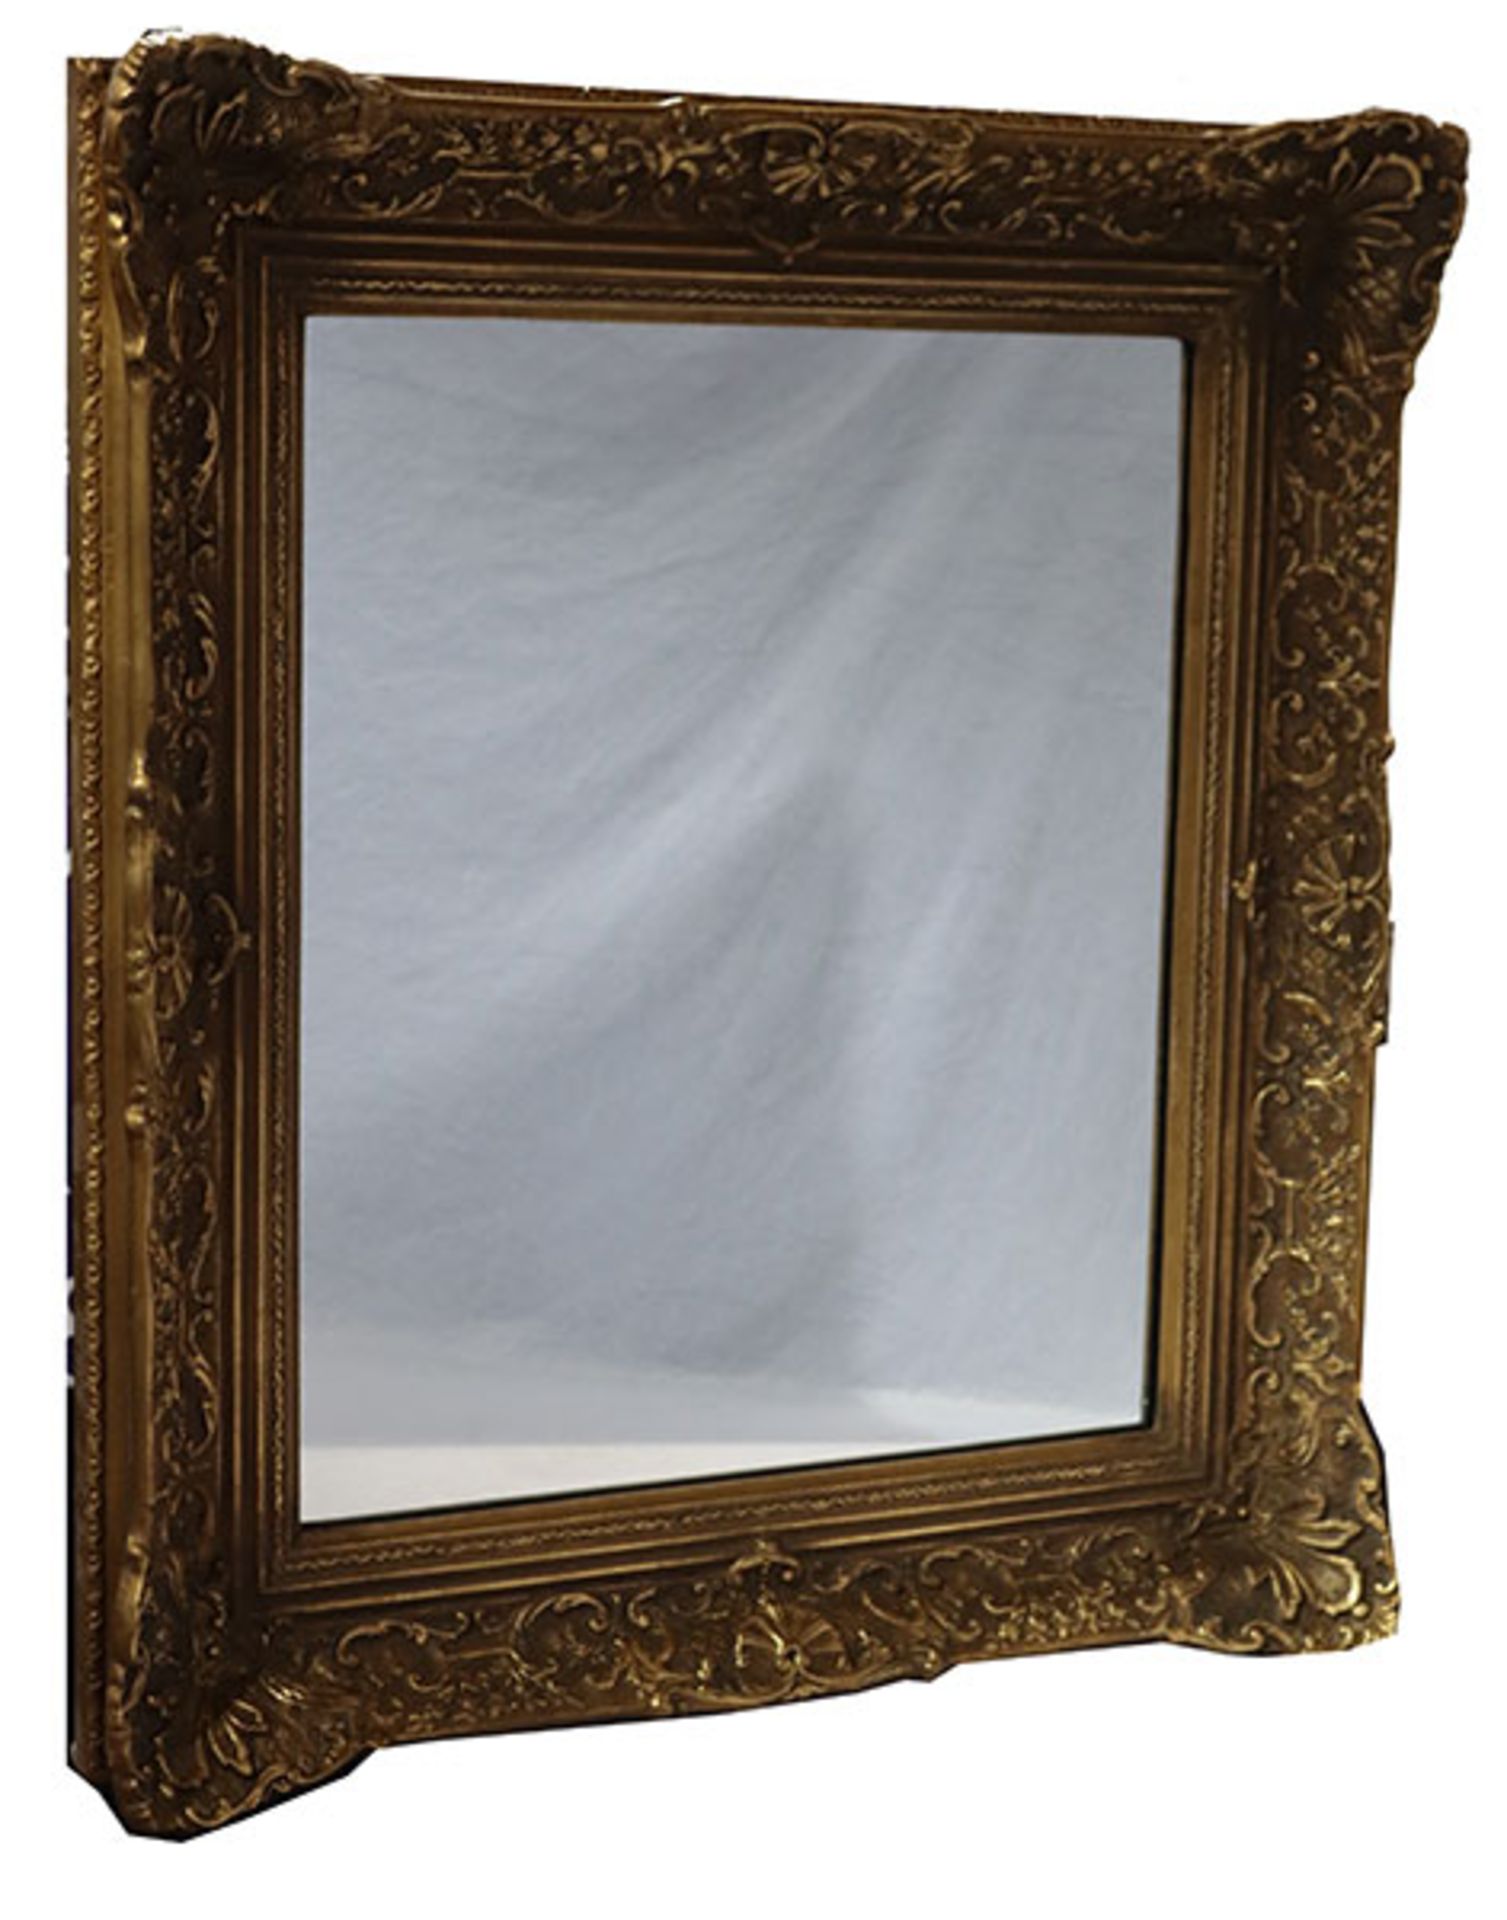 Wandspiegel in dekorativem Goldrahmen, Rahmen leicht bestossen, incl. Rahmen 90 cm x 77 cm, kein